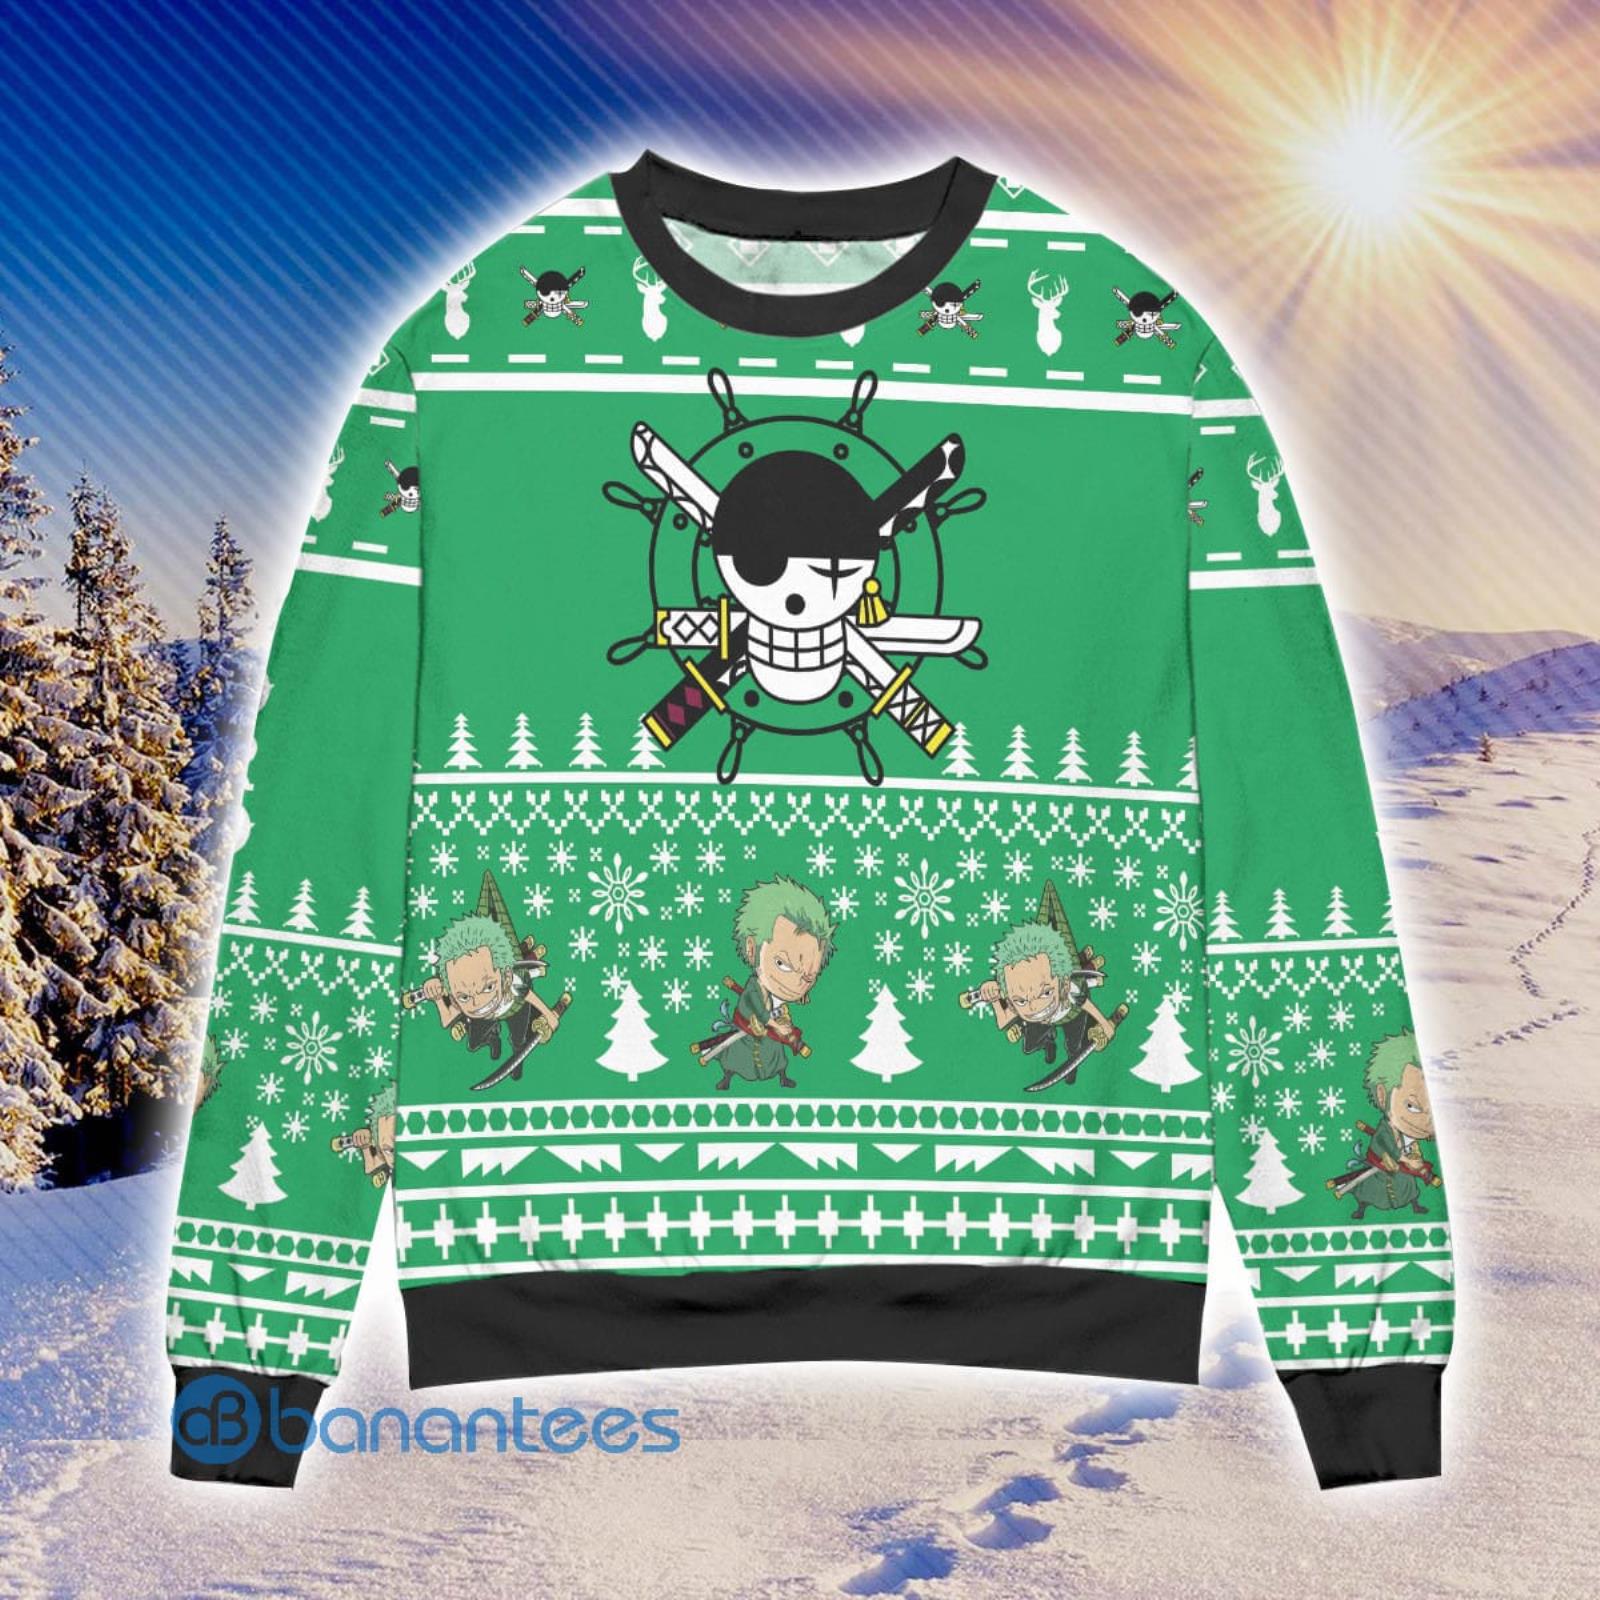 Christmas Zoro One Piece Xmas Men And Women Christmas Gift 3D Ugly Christmas  Sweater - Banantees